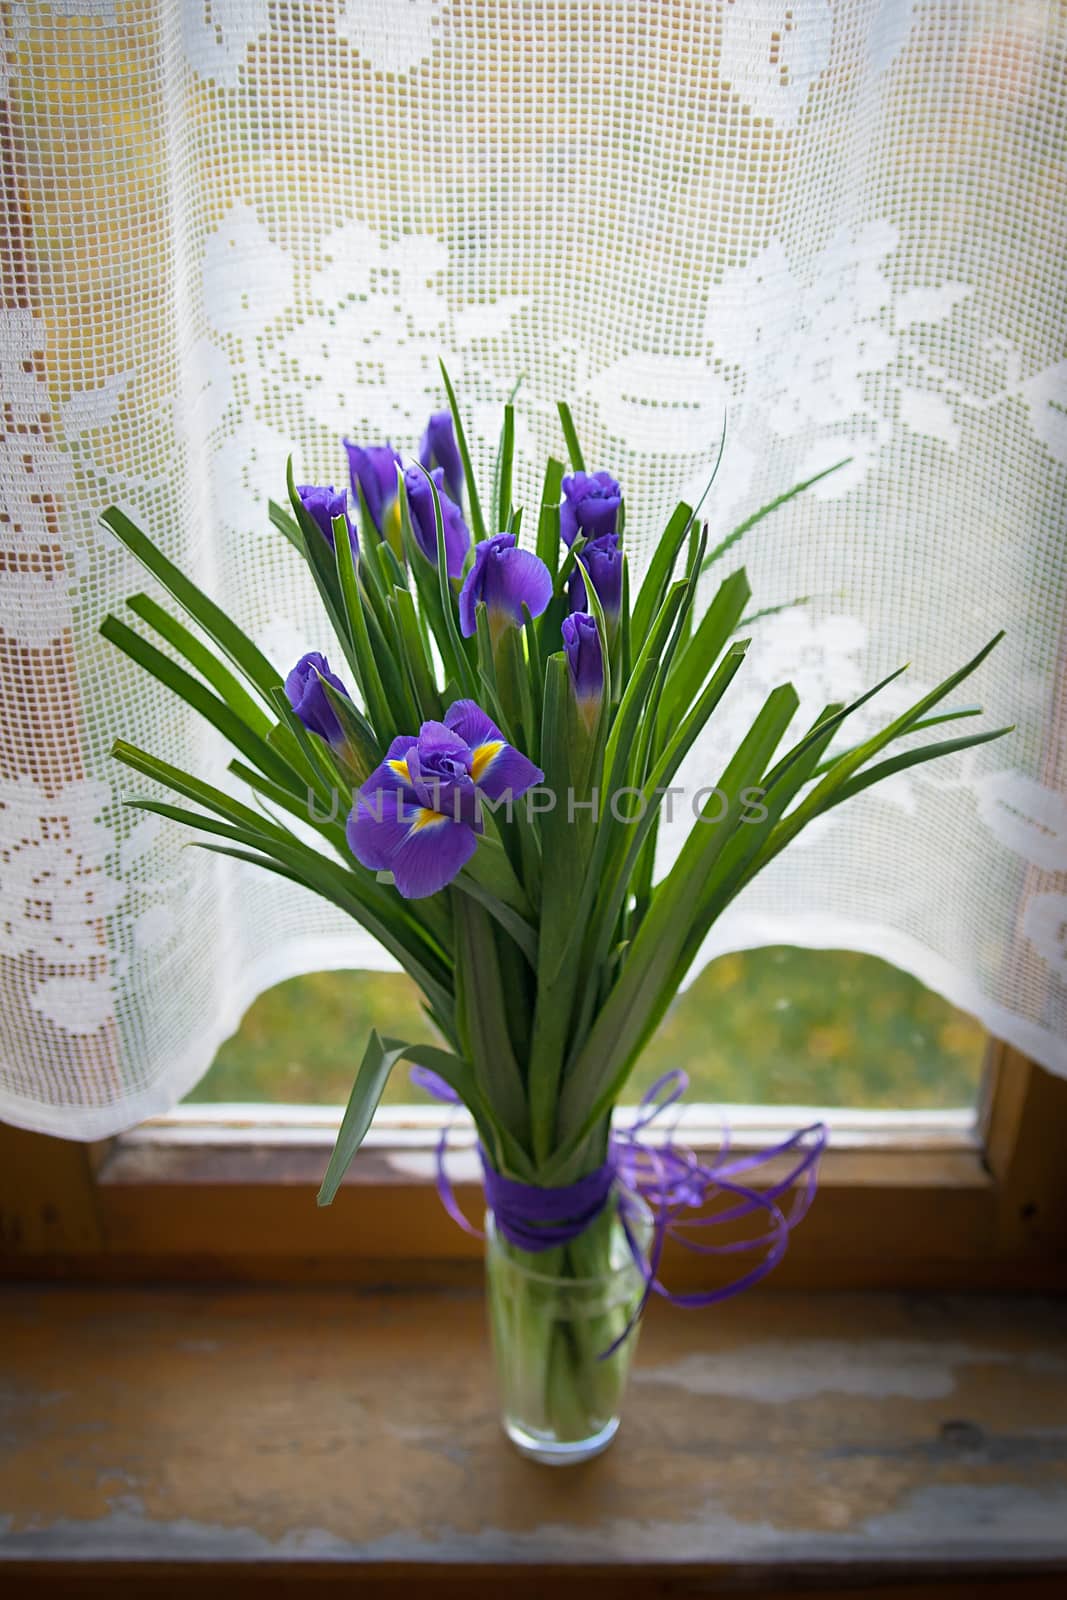 Purple iris flowers in vase, on wooden table by sfinks